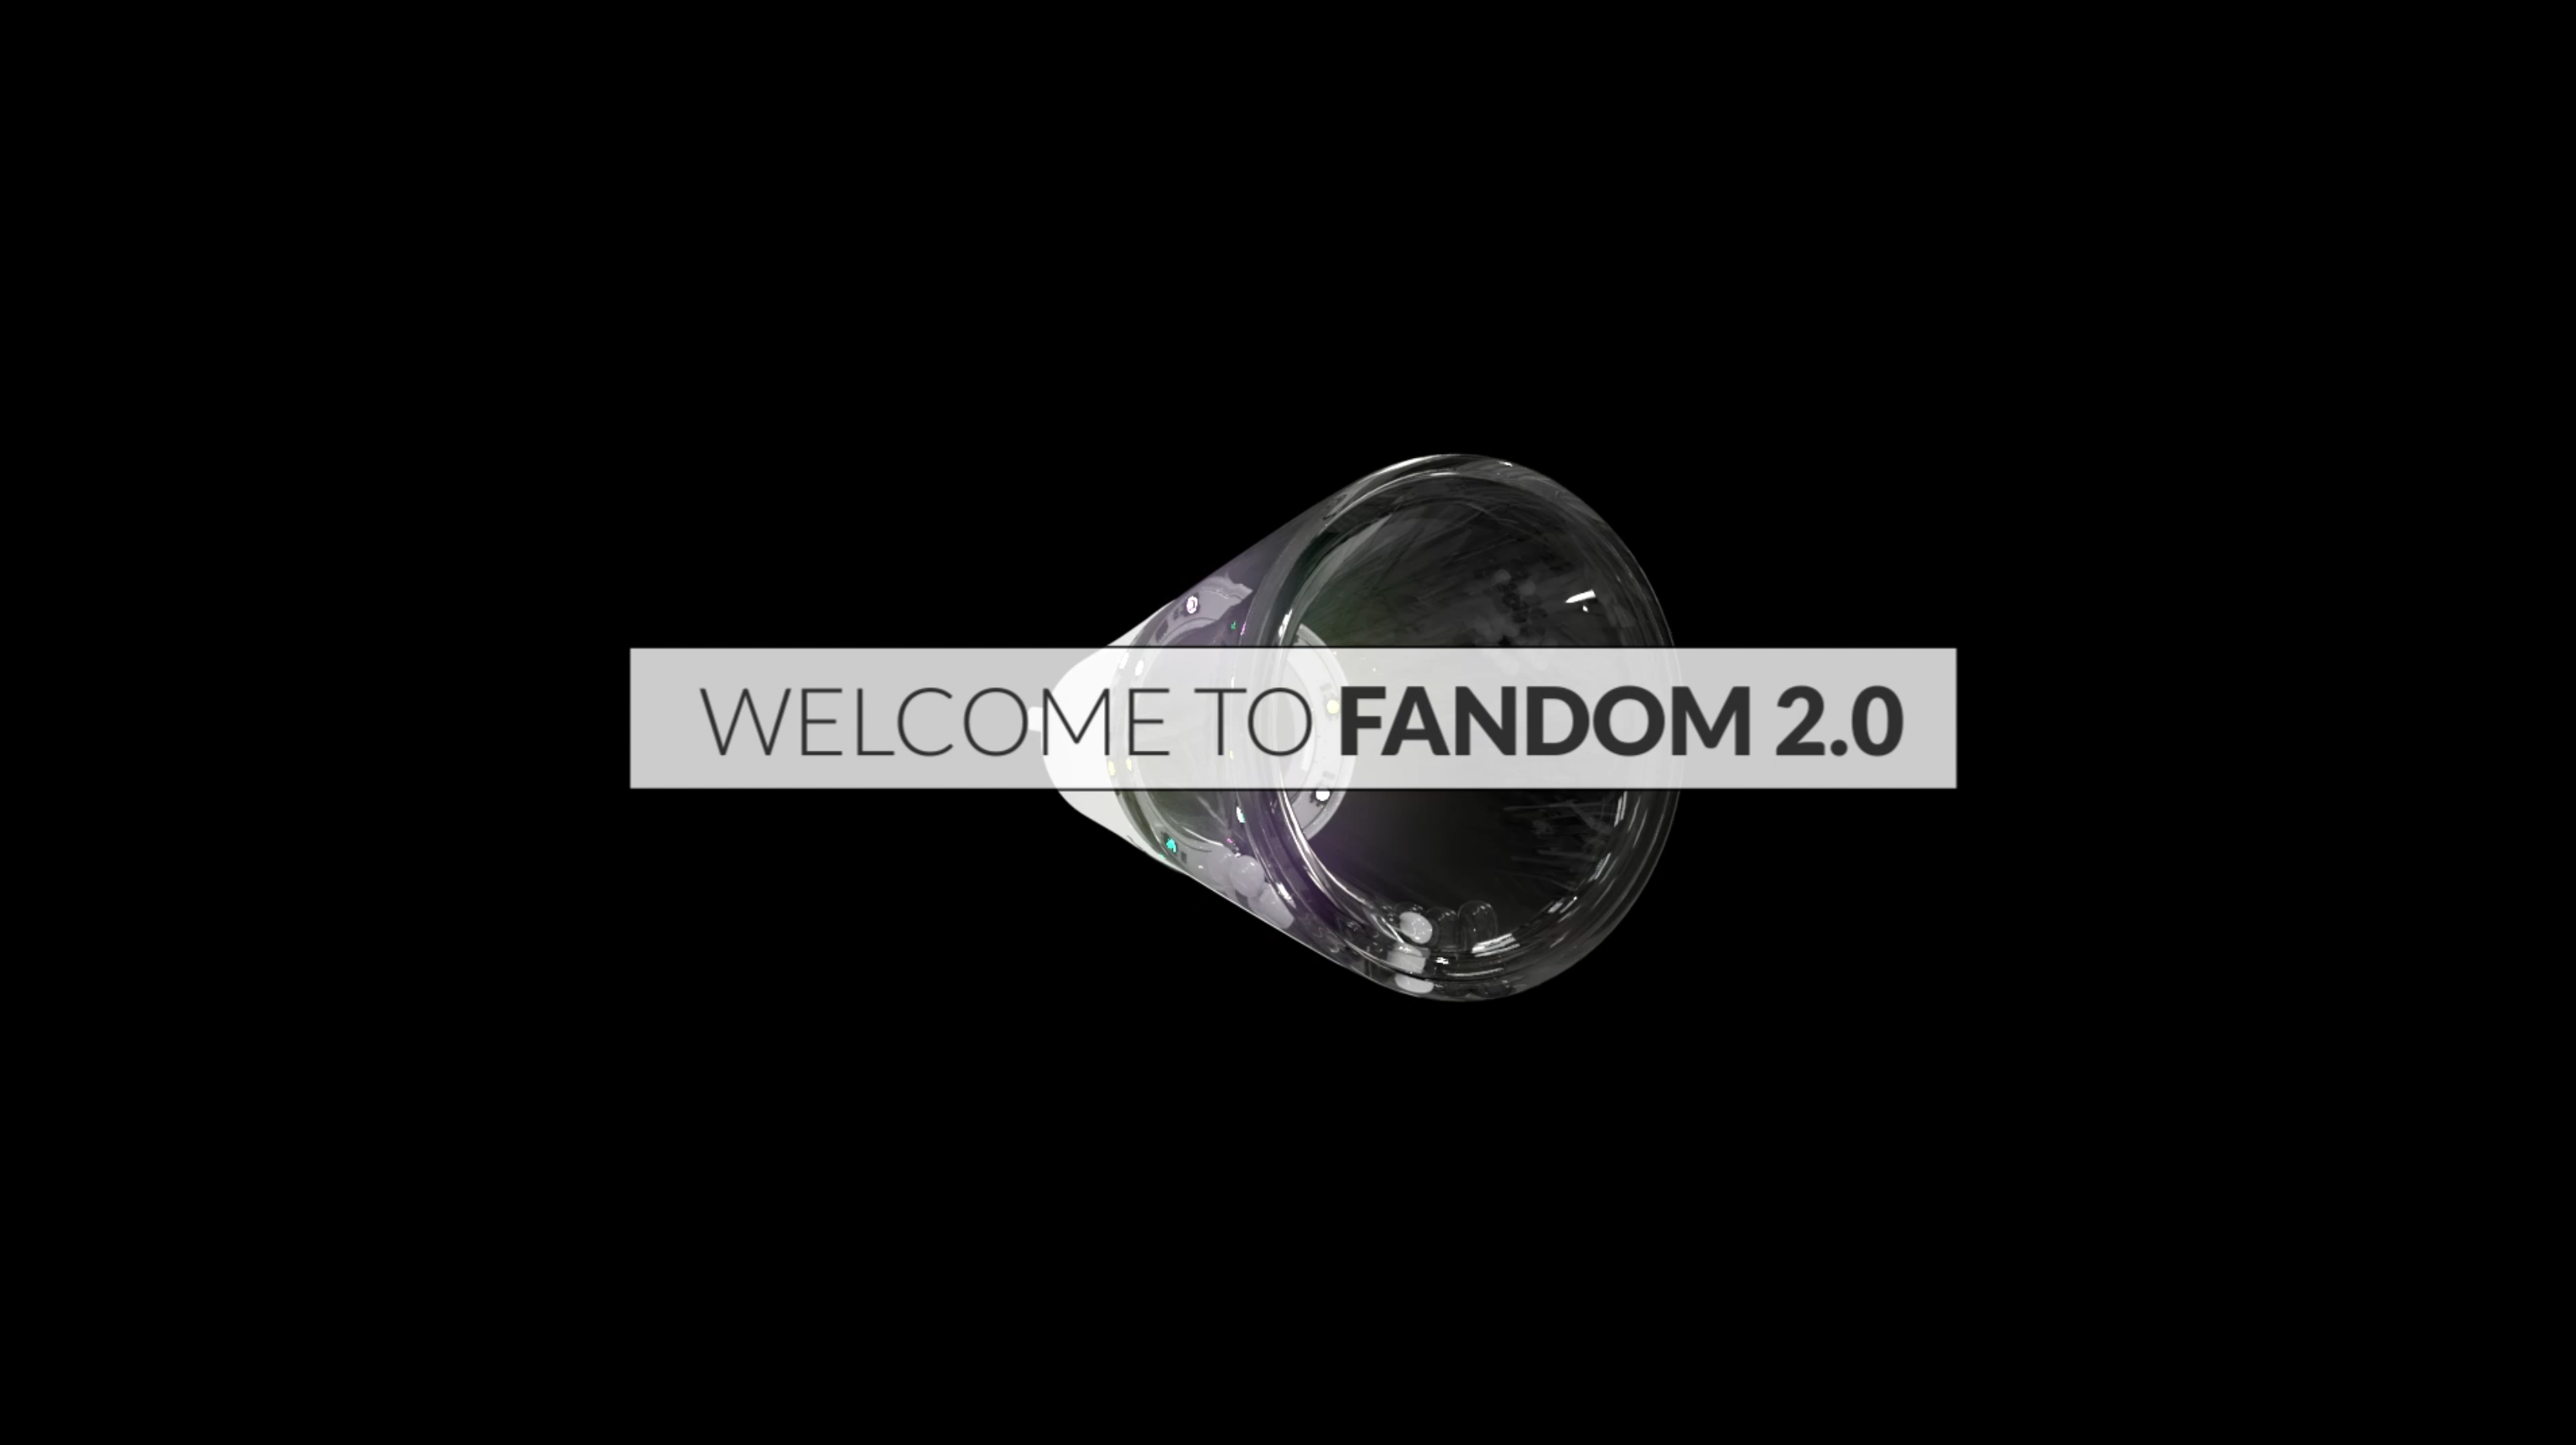 Welcome to Fandom 2.0